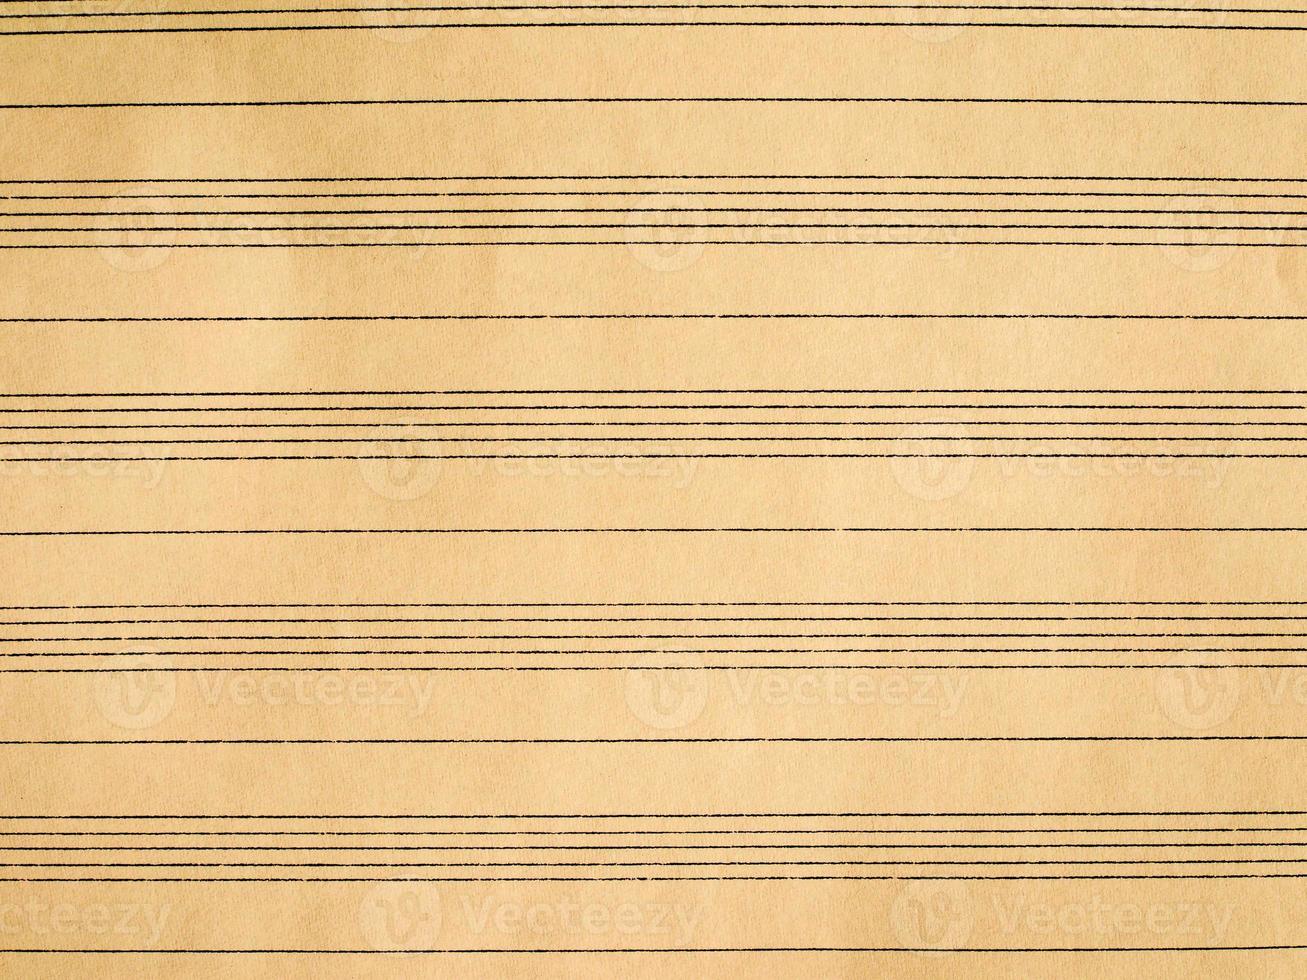 Blank sheet music photo